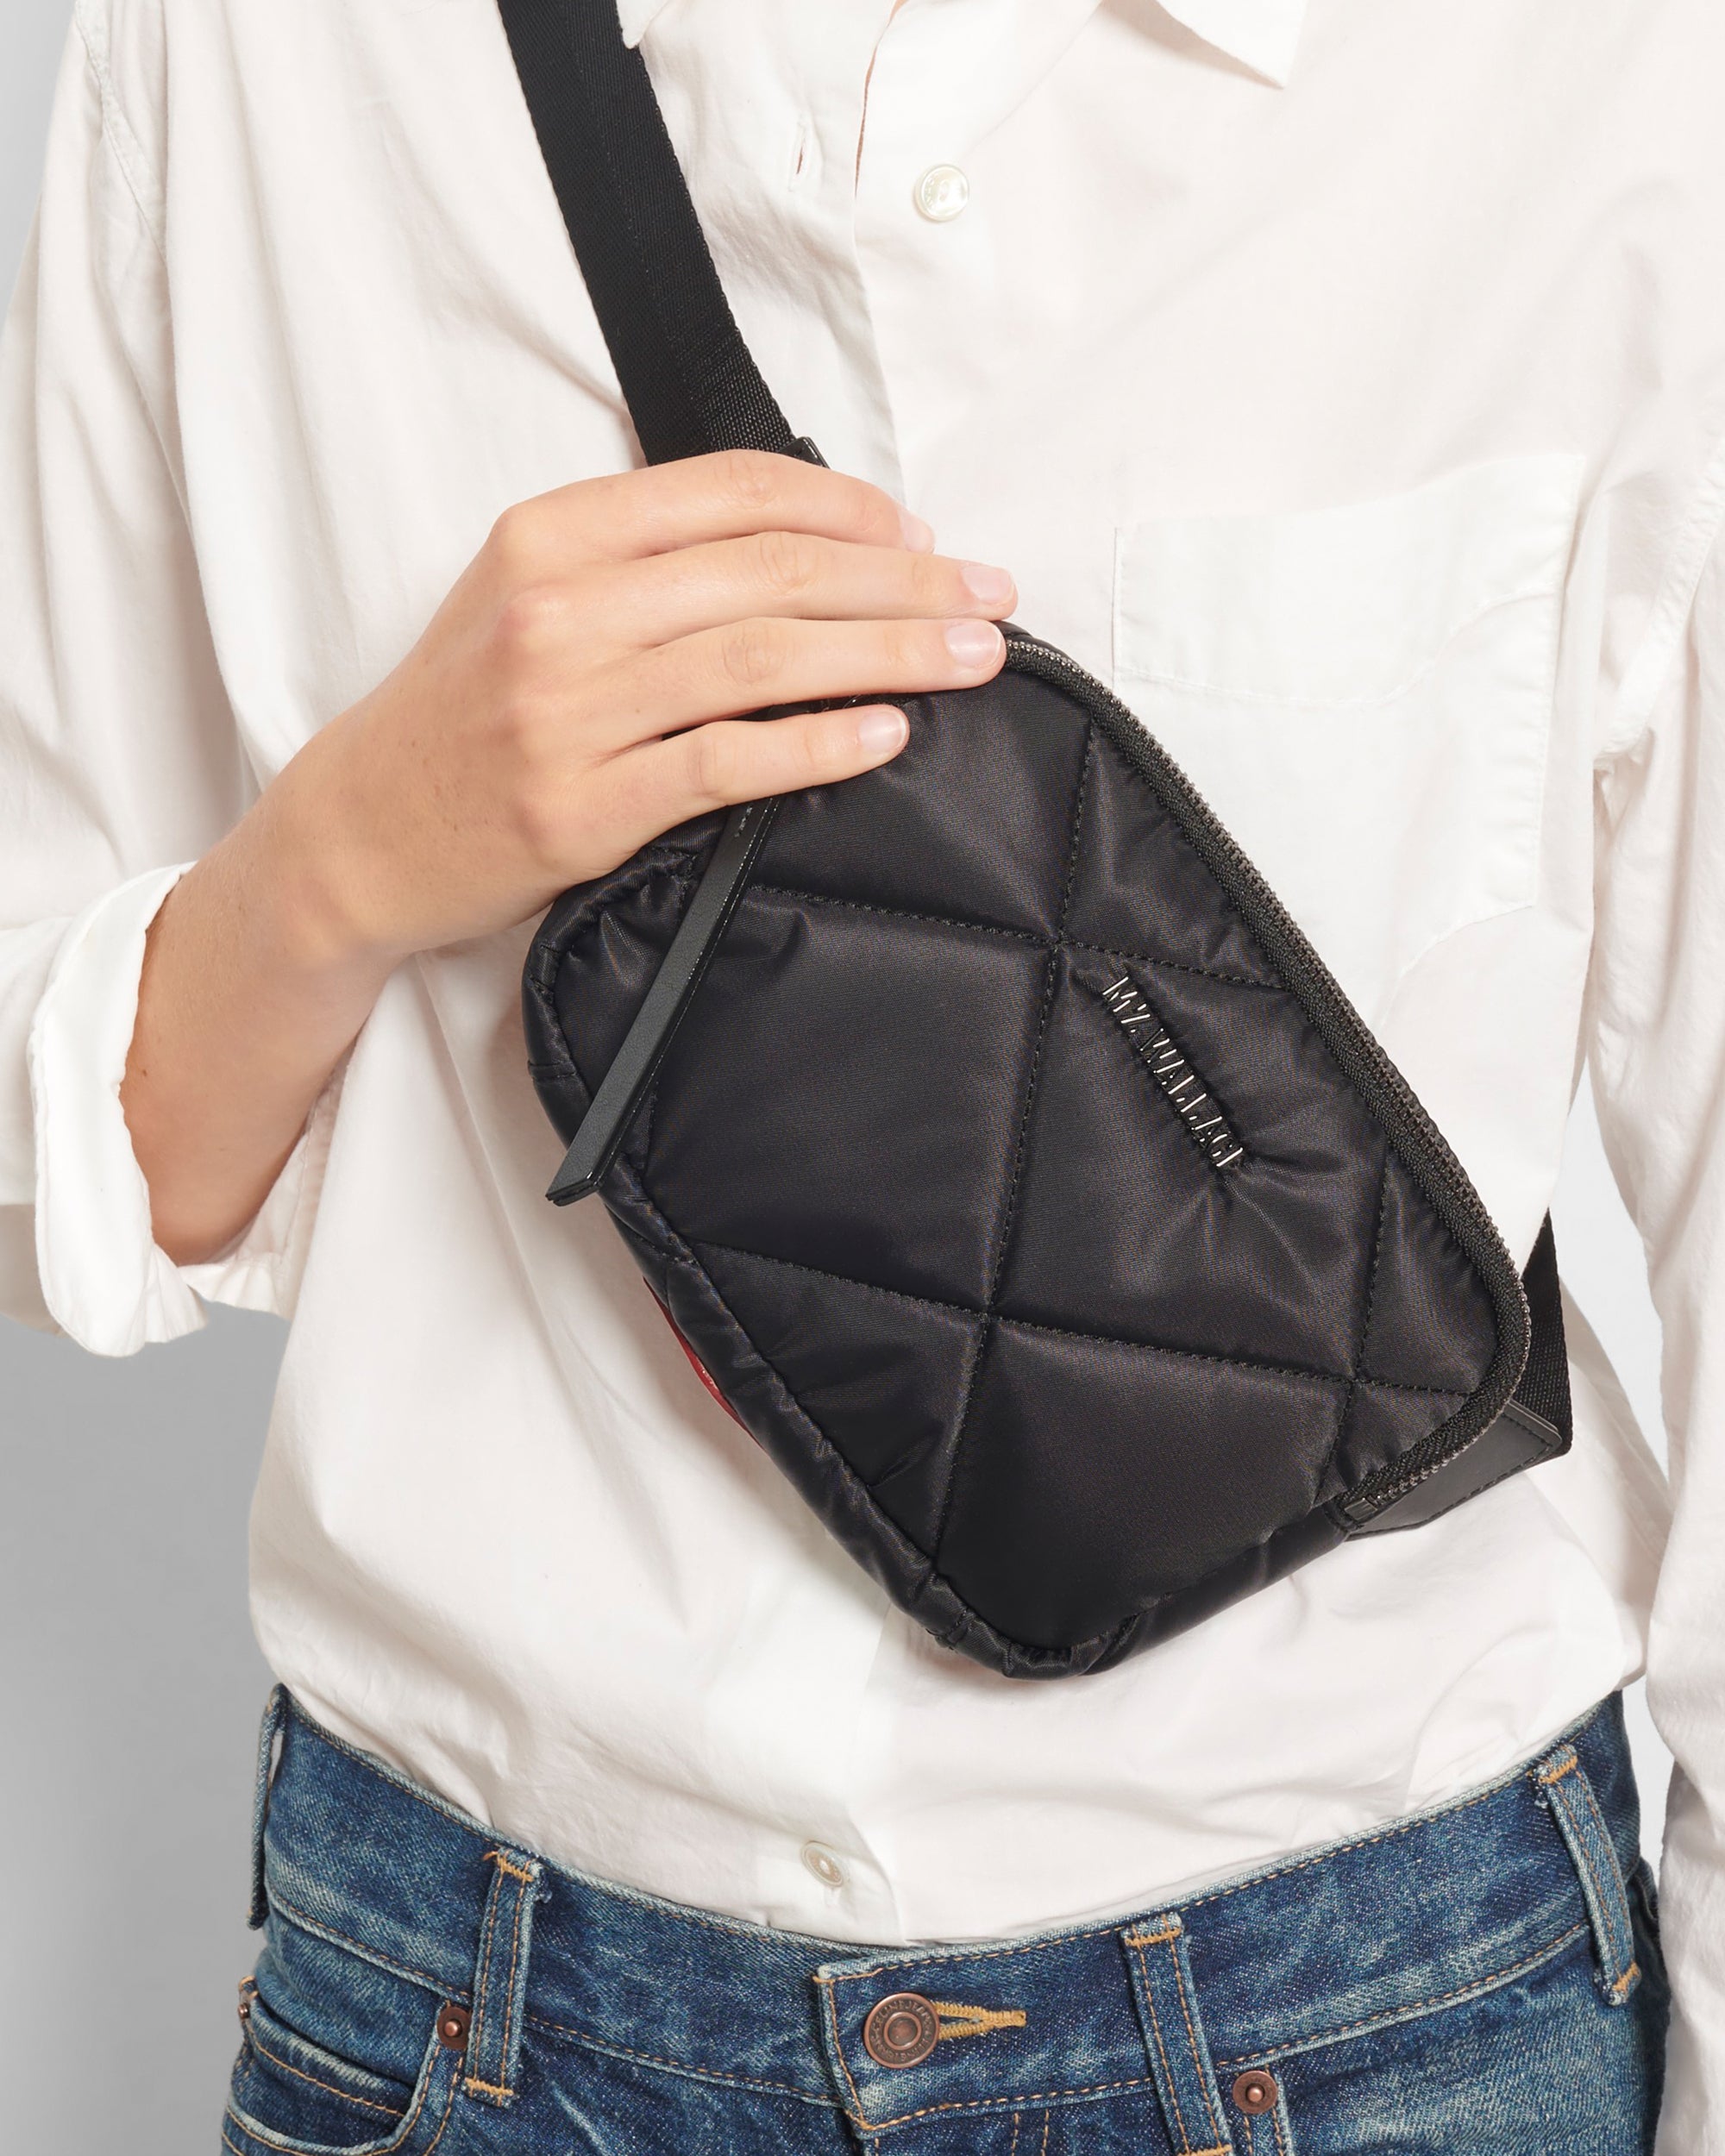 Repurposed LV Rhinestone belt bag purse